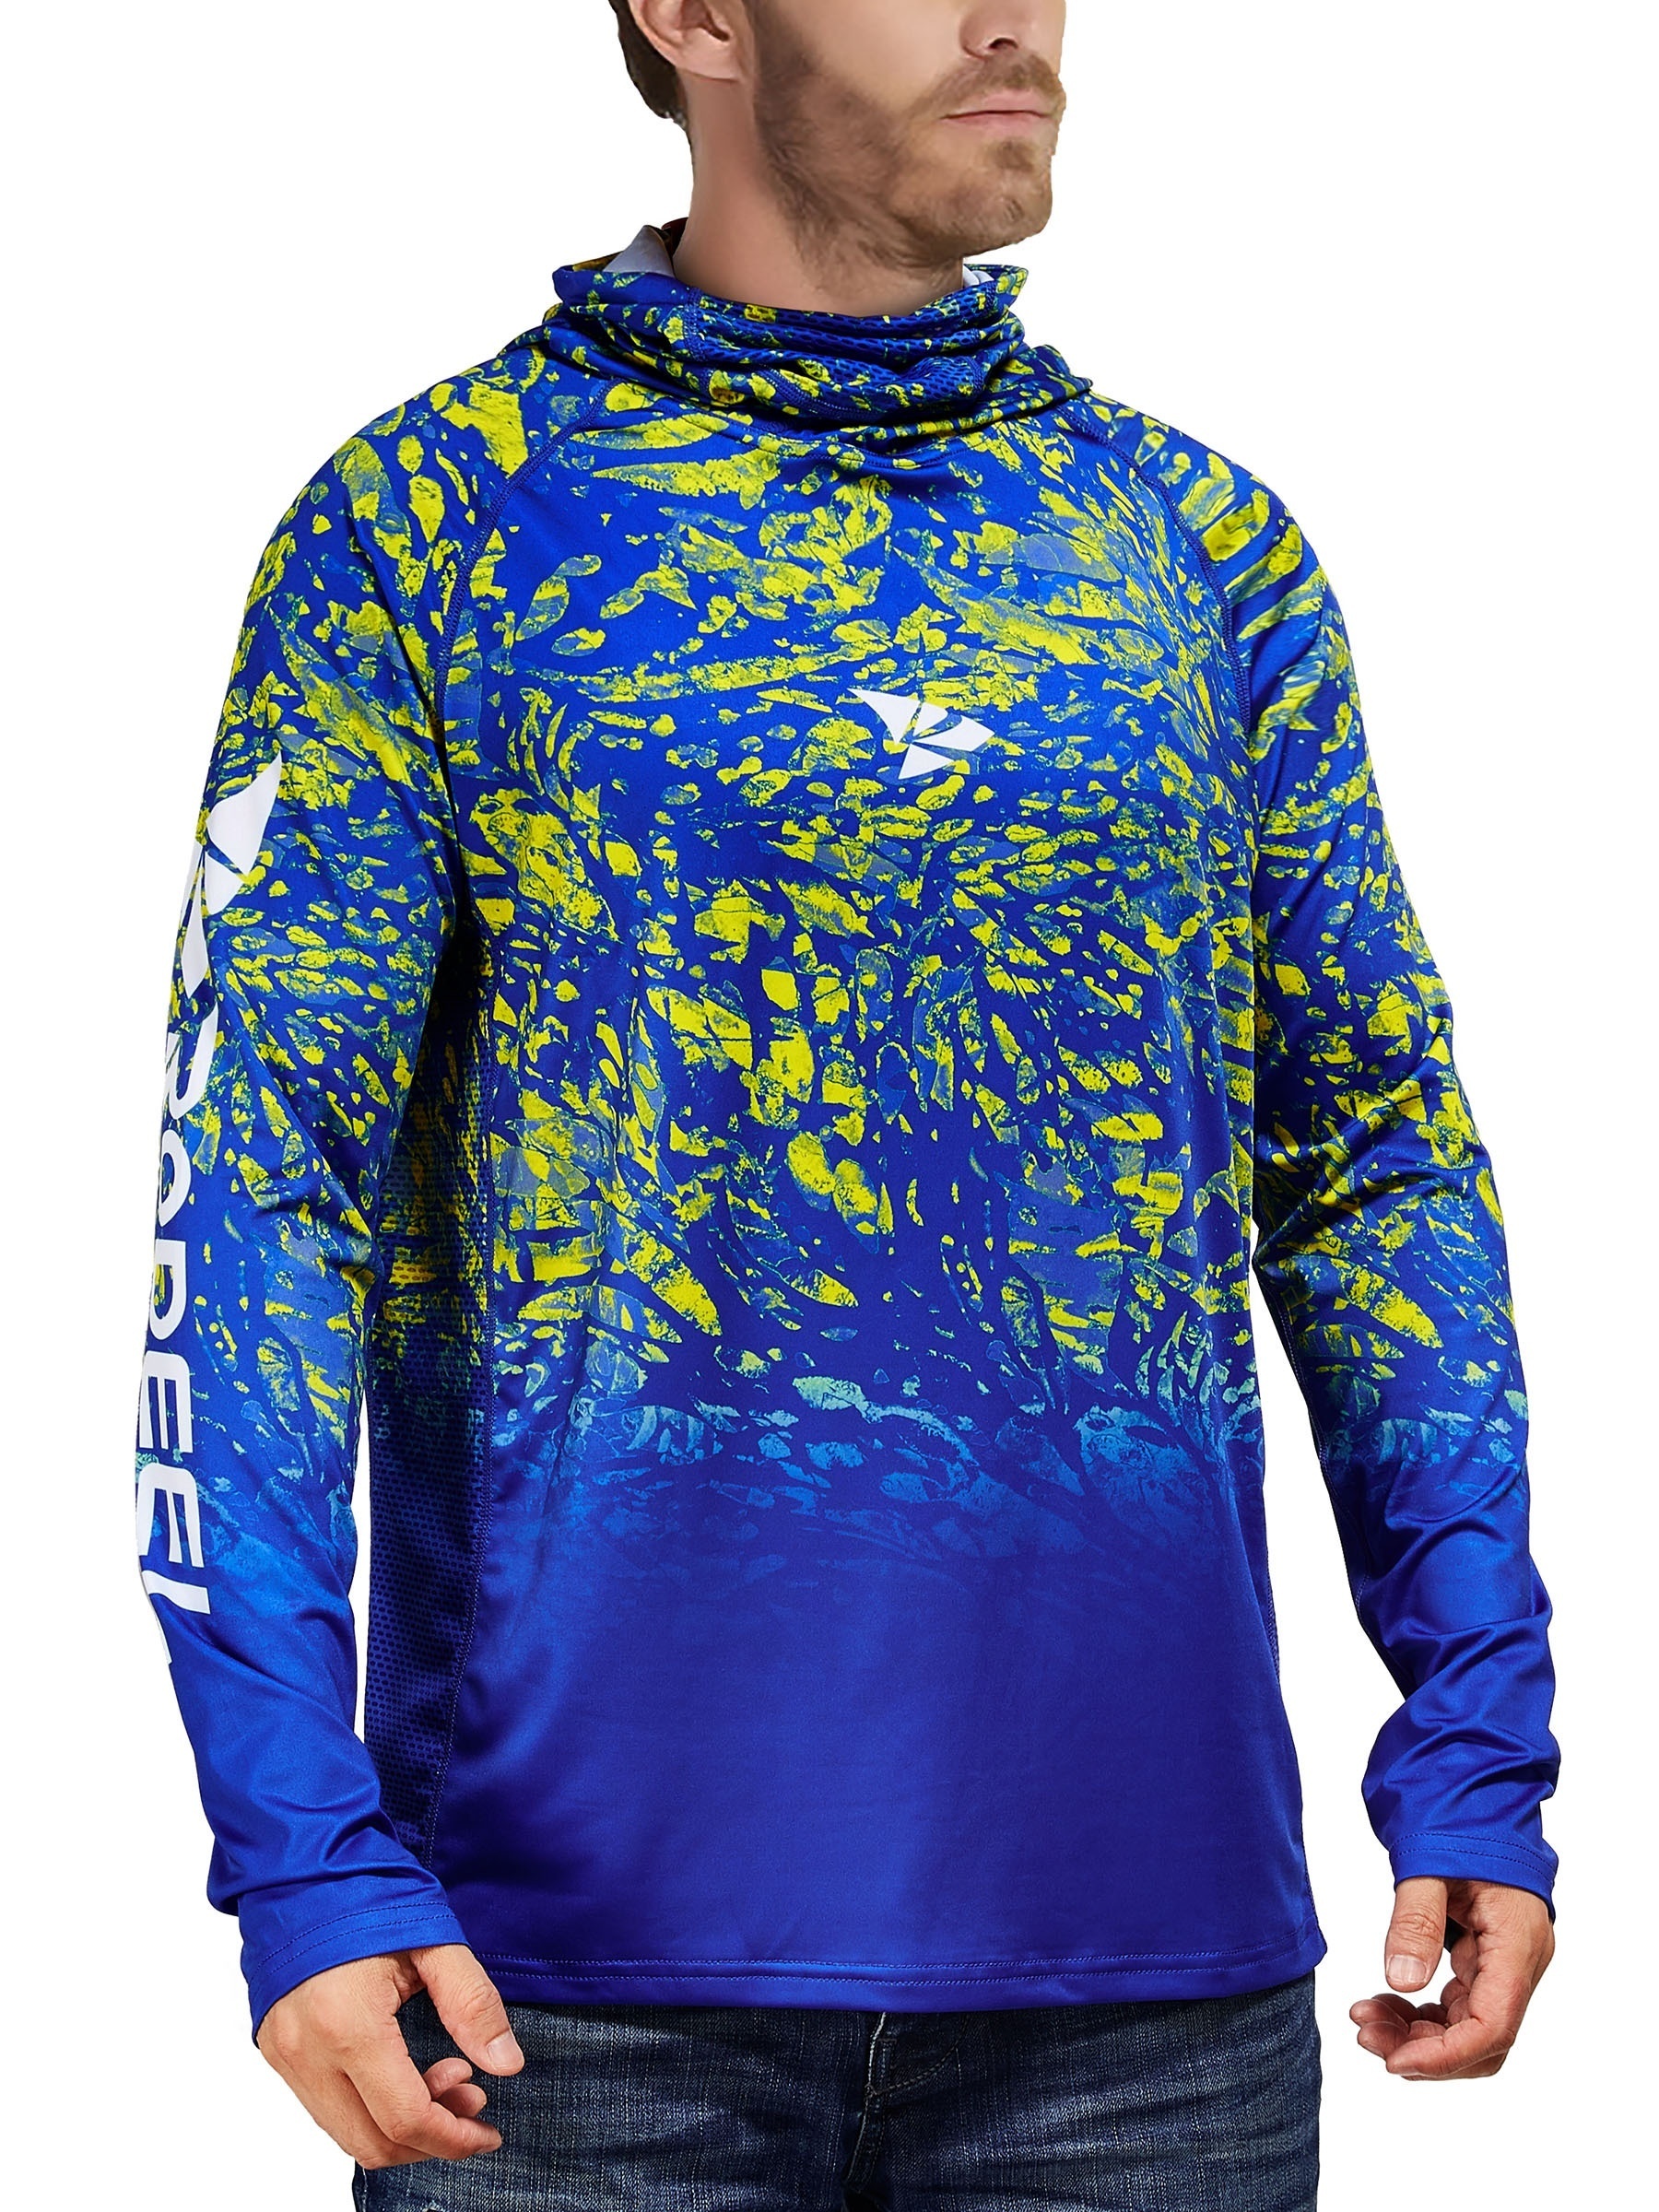 Hubunucc Men's Long Sleeve UV Protection Fishing Shirt for Outdoor  Activities